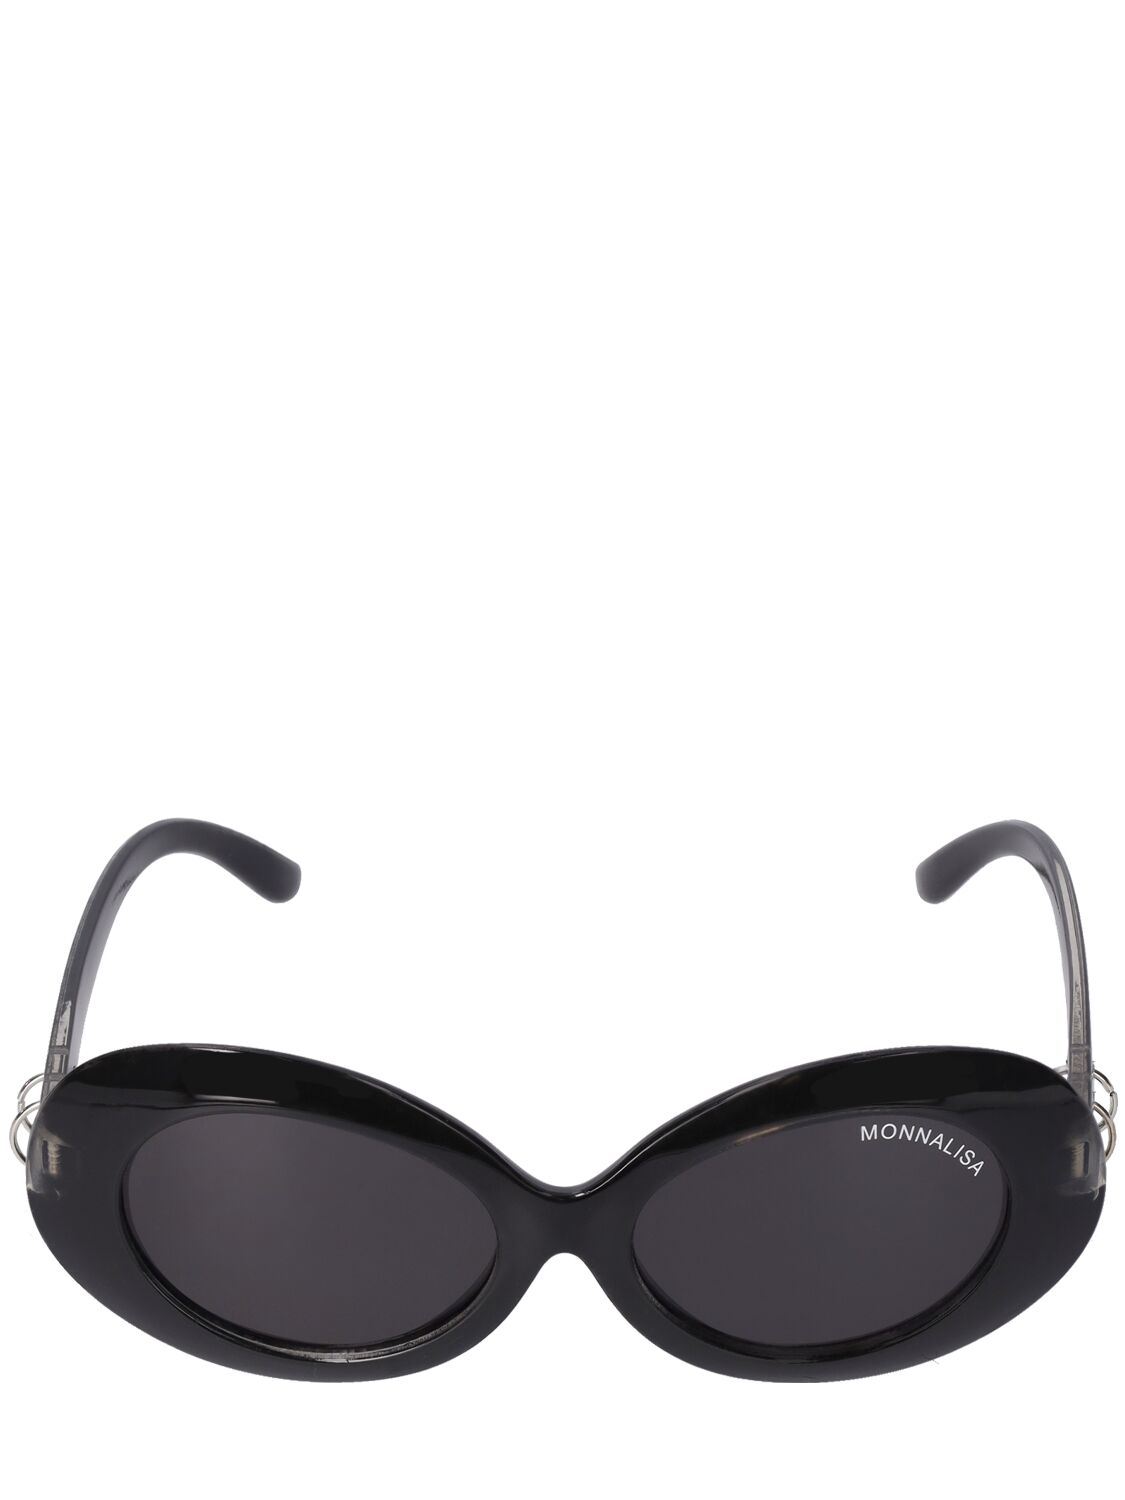 Monnalisa Kids' Polycarbonate Sunglasses In Black